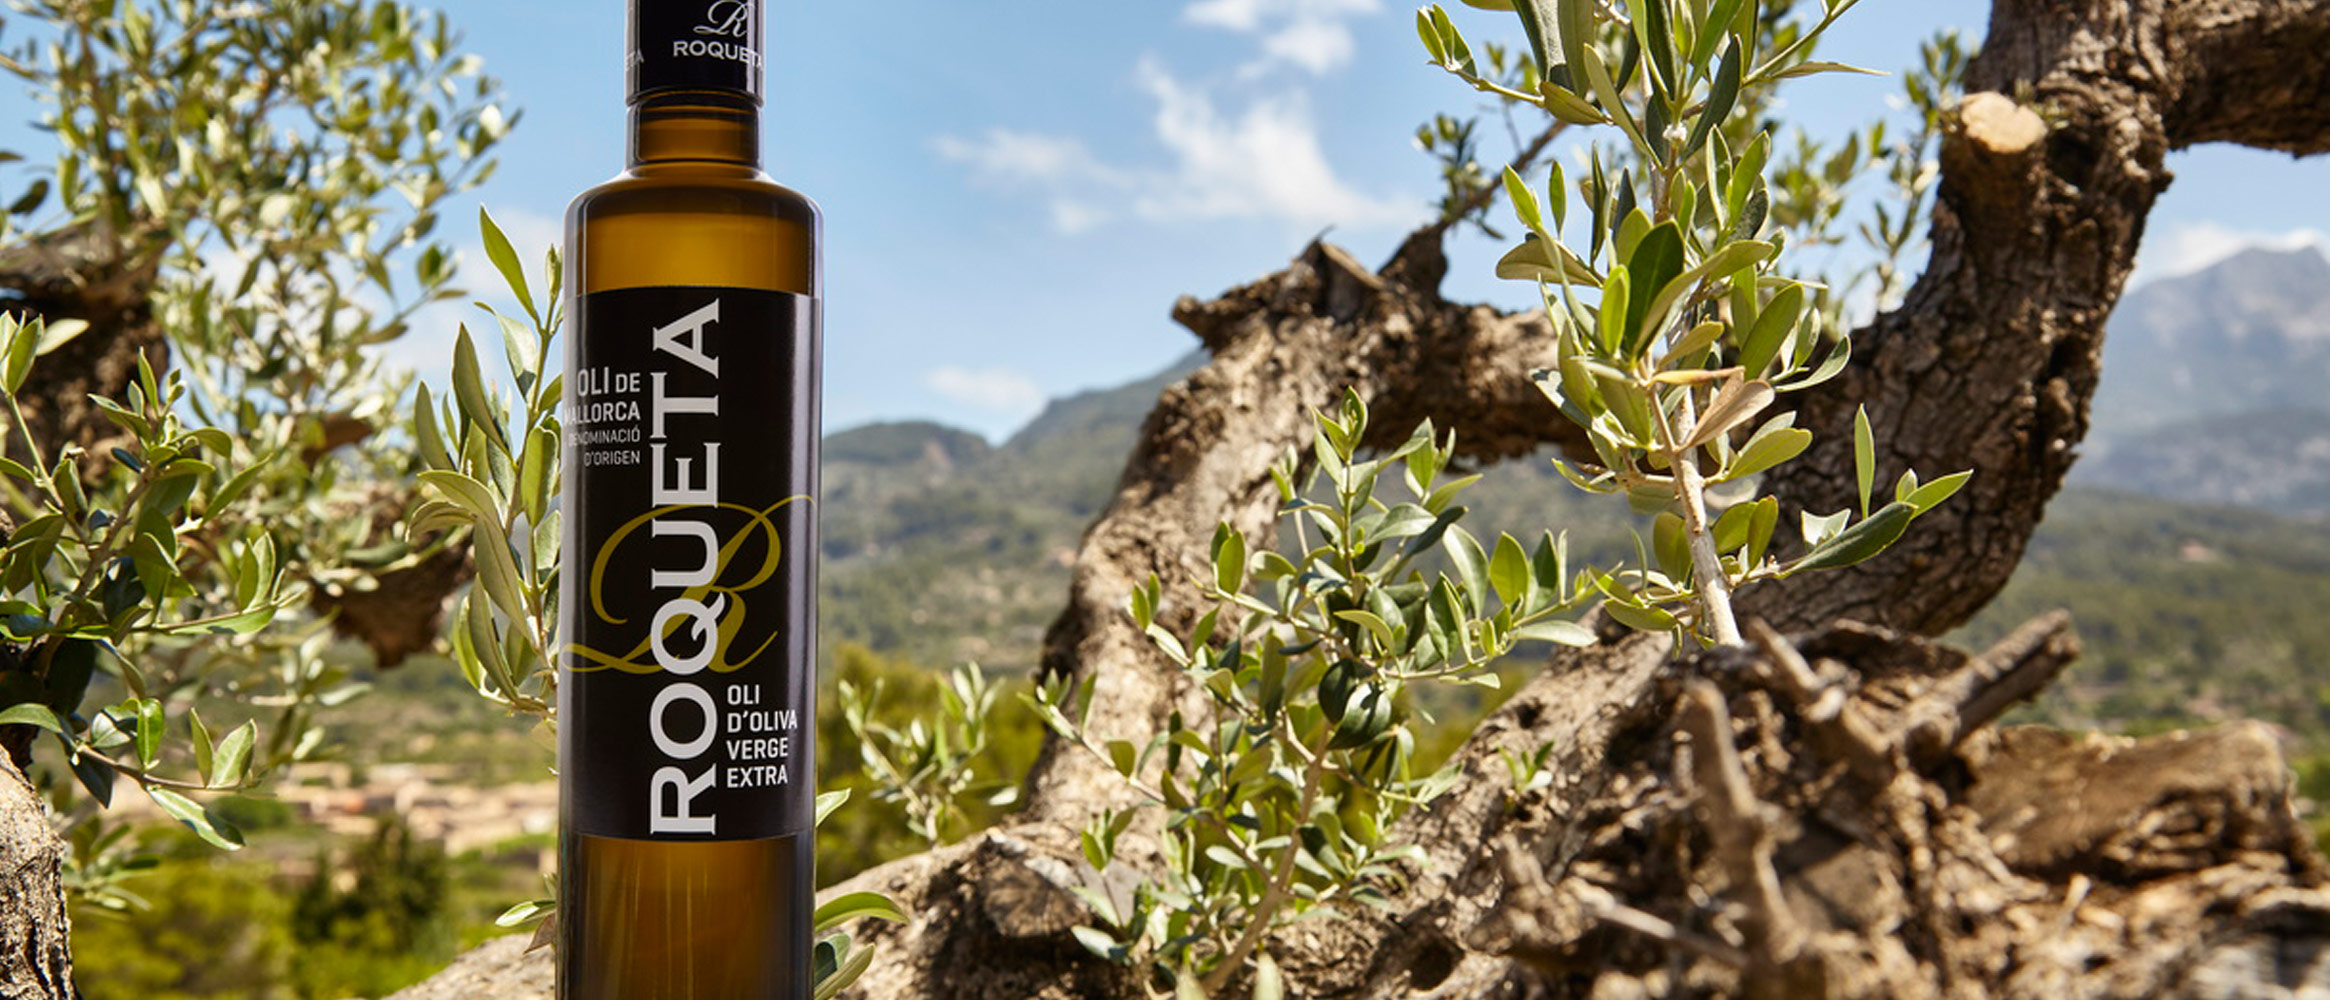 Roqueta extra virgin olive oil D.O.